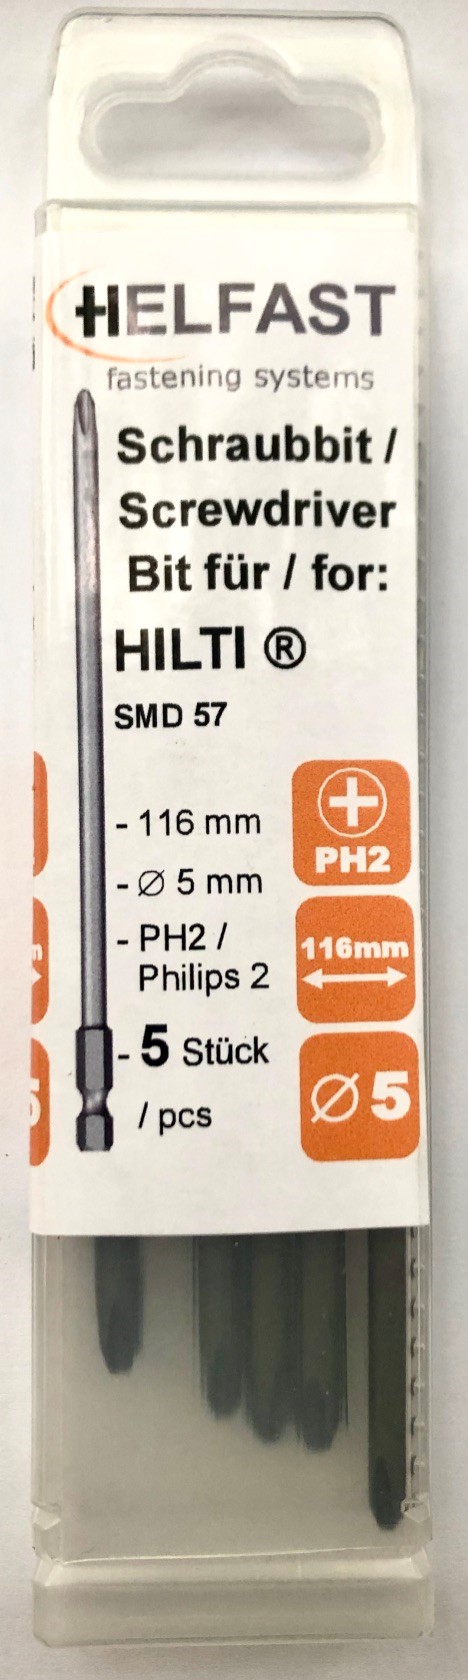 Autofeed screw driver bits for HILTI SMD57